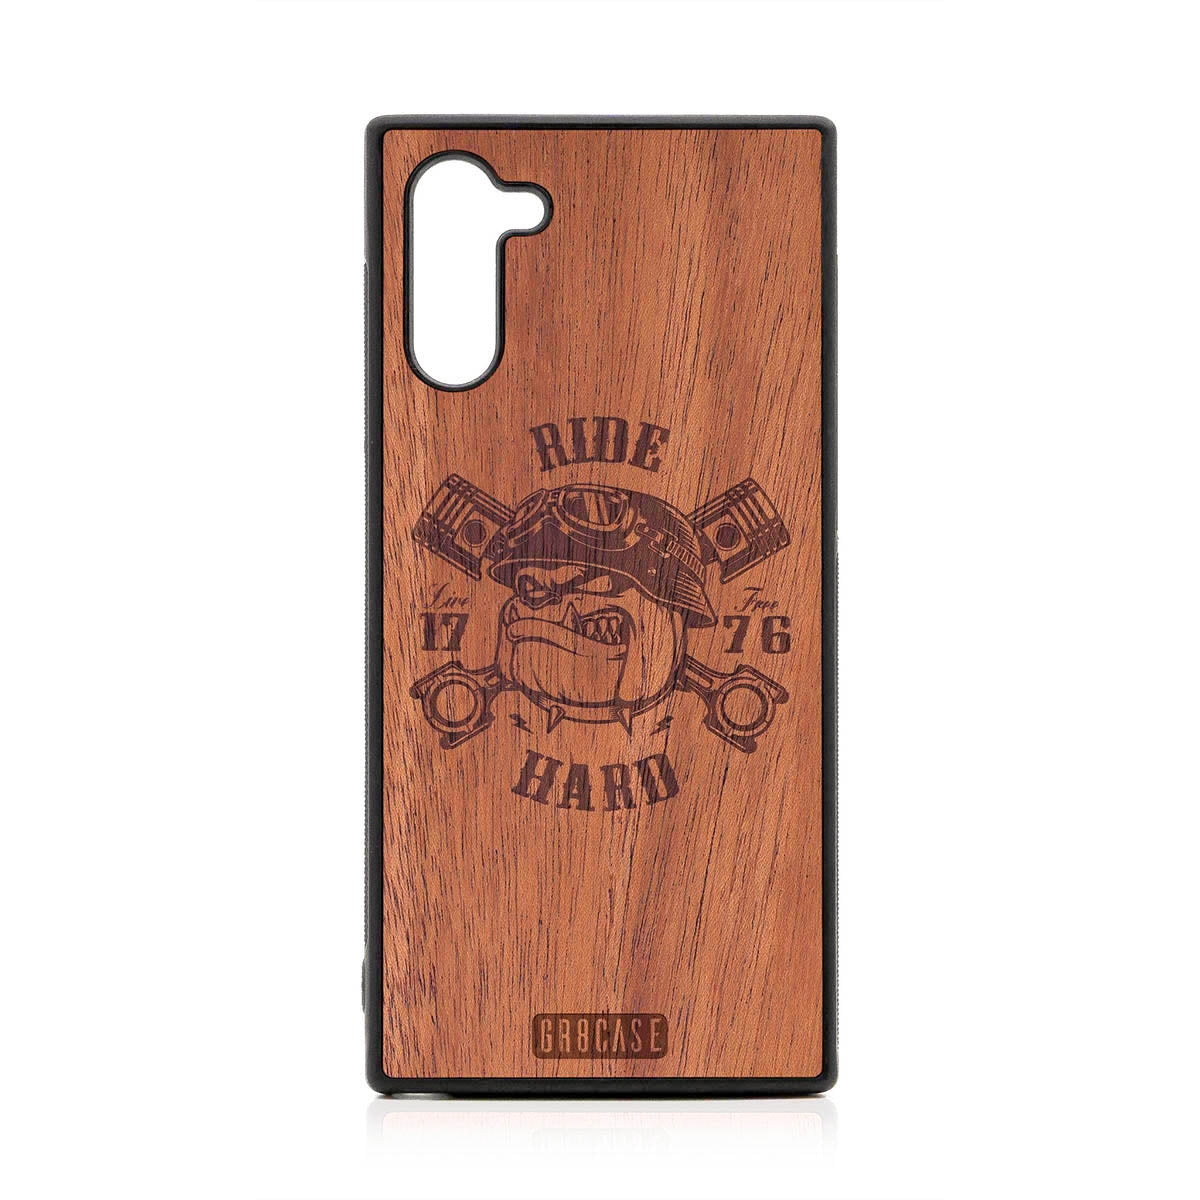 Ride Hard Live Free (Biker Dog) Design Wood Case For Samsung Galaxy Note 10 by GR8CASE